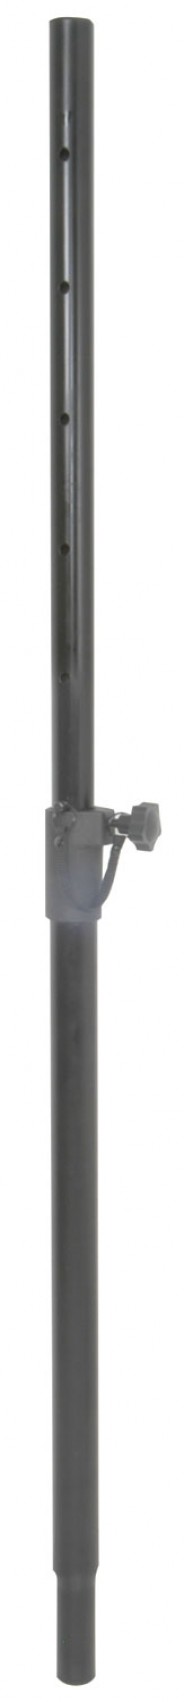 QTX Telescopic Speaker Pole